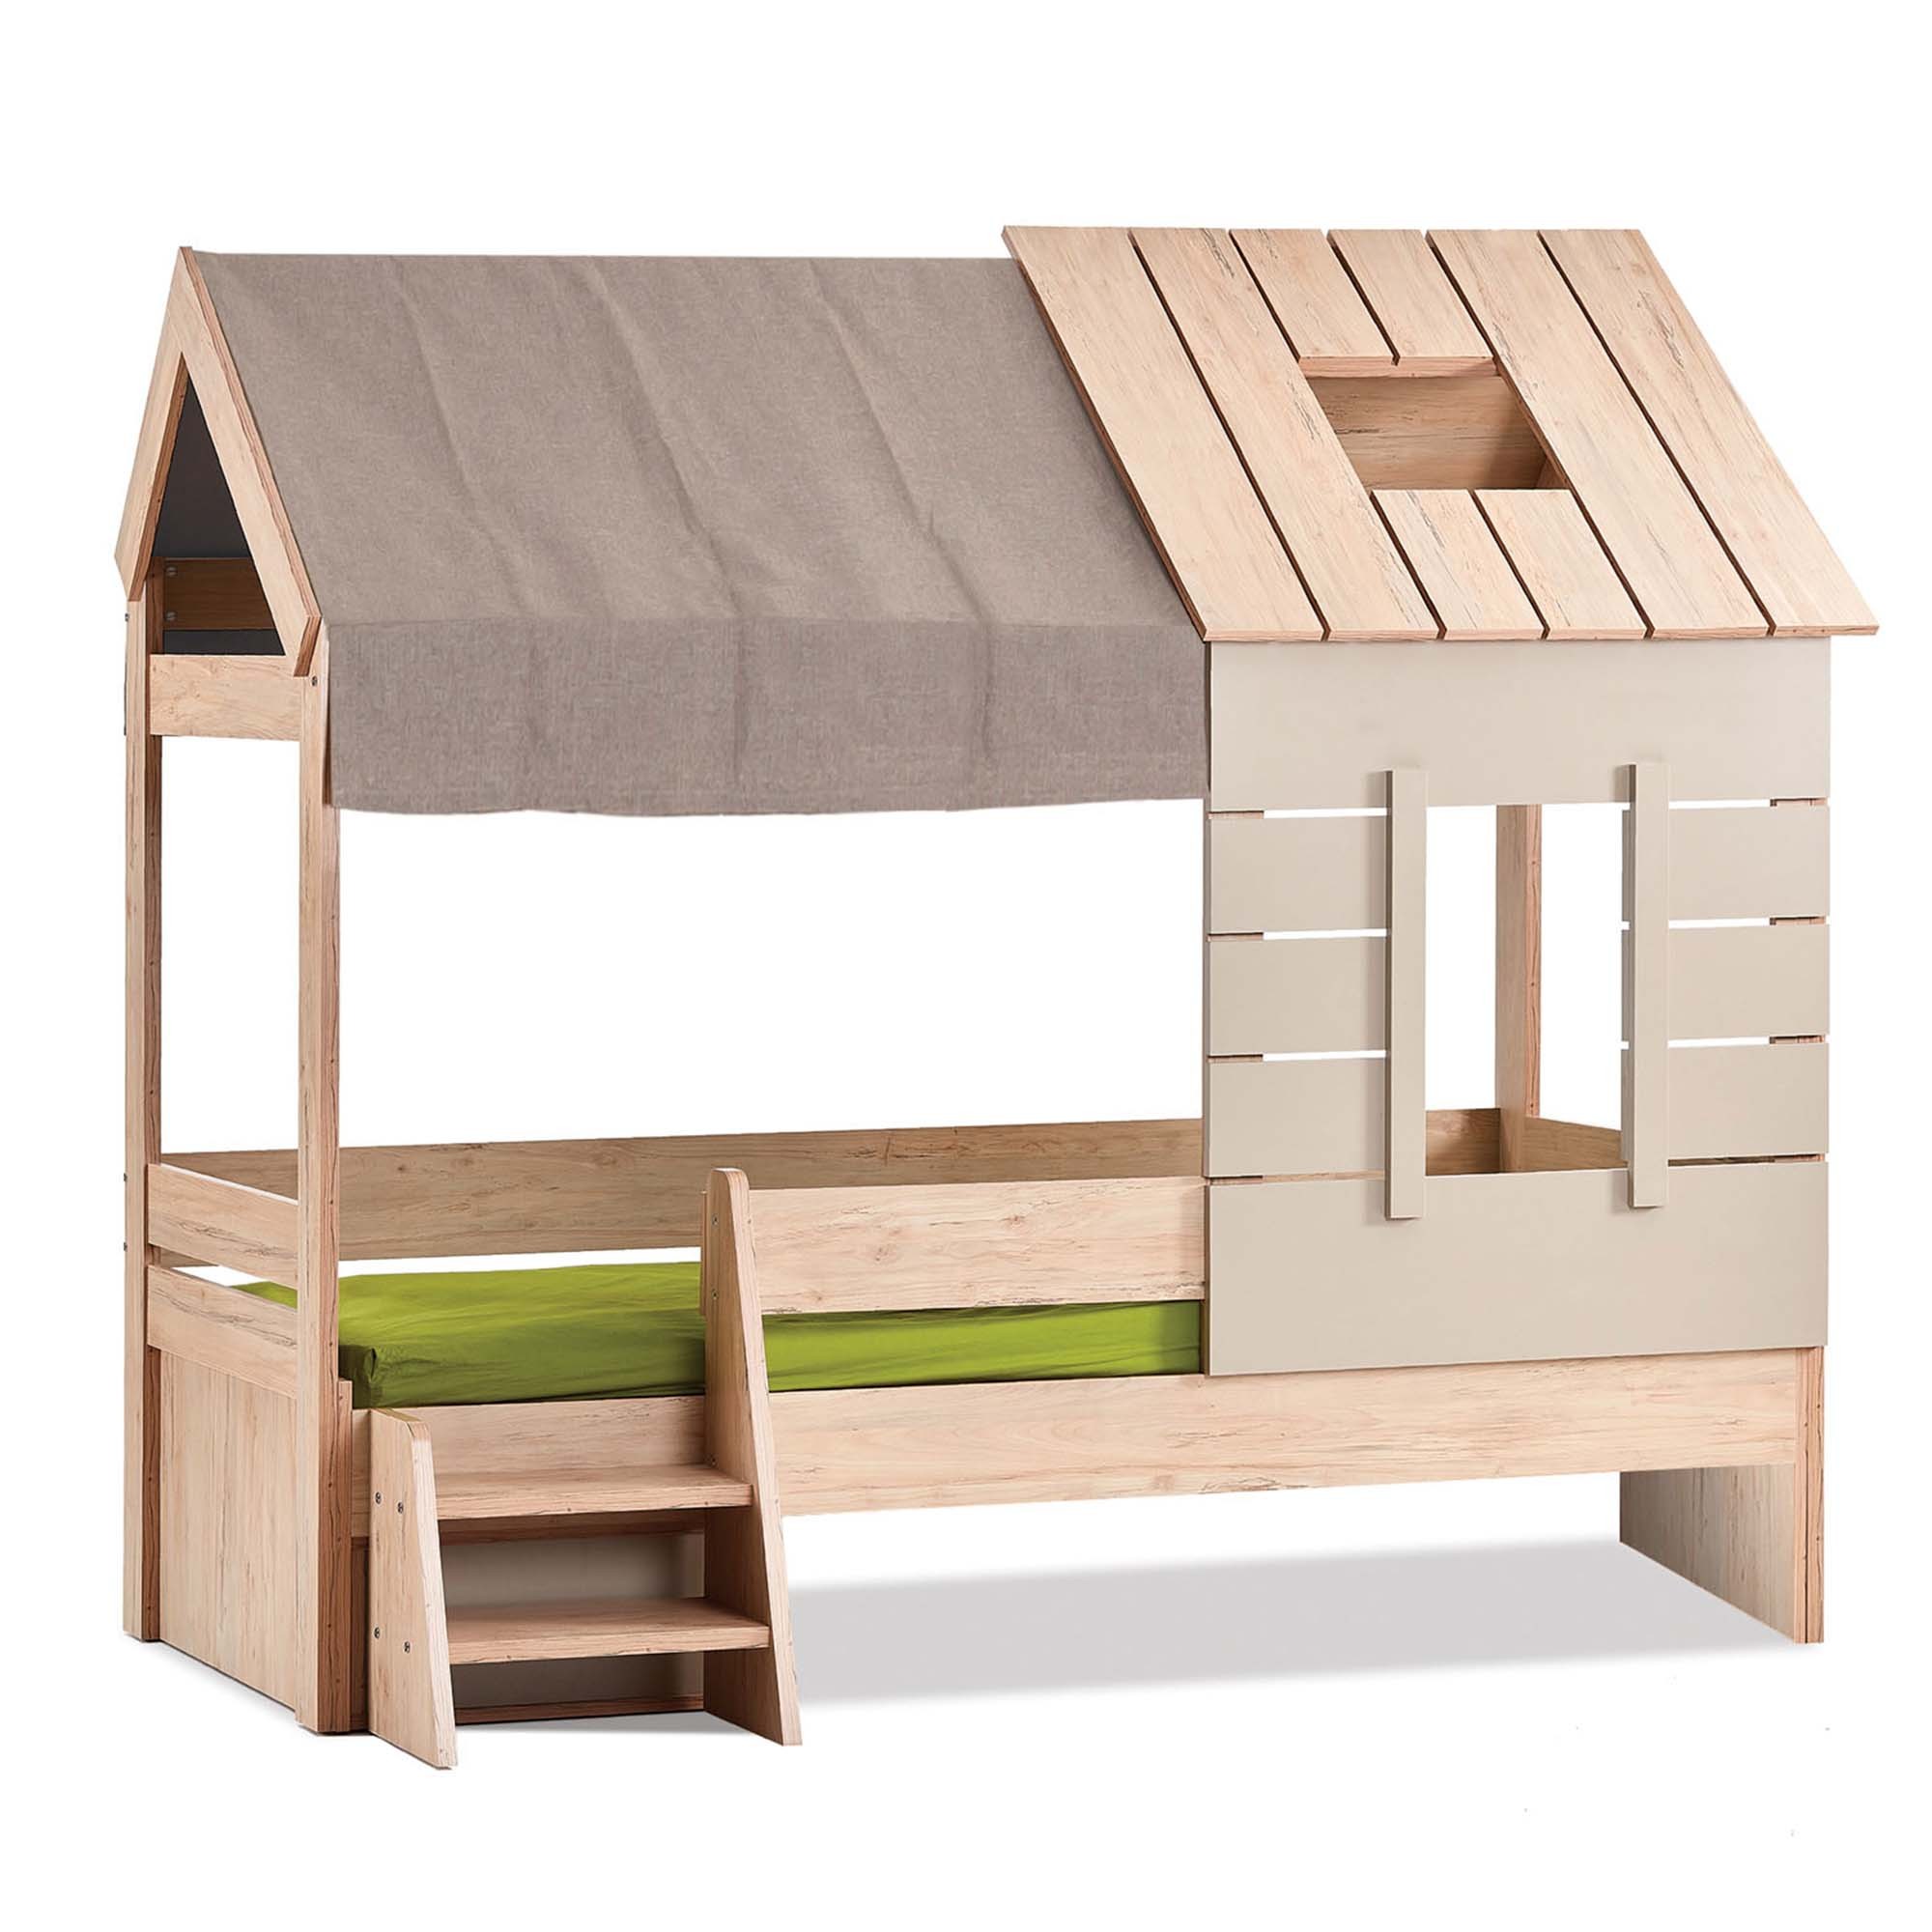 Cama infantil Montessori casita con barandilla Sawyer 90x190cm Blanco